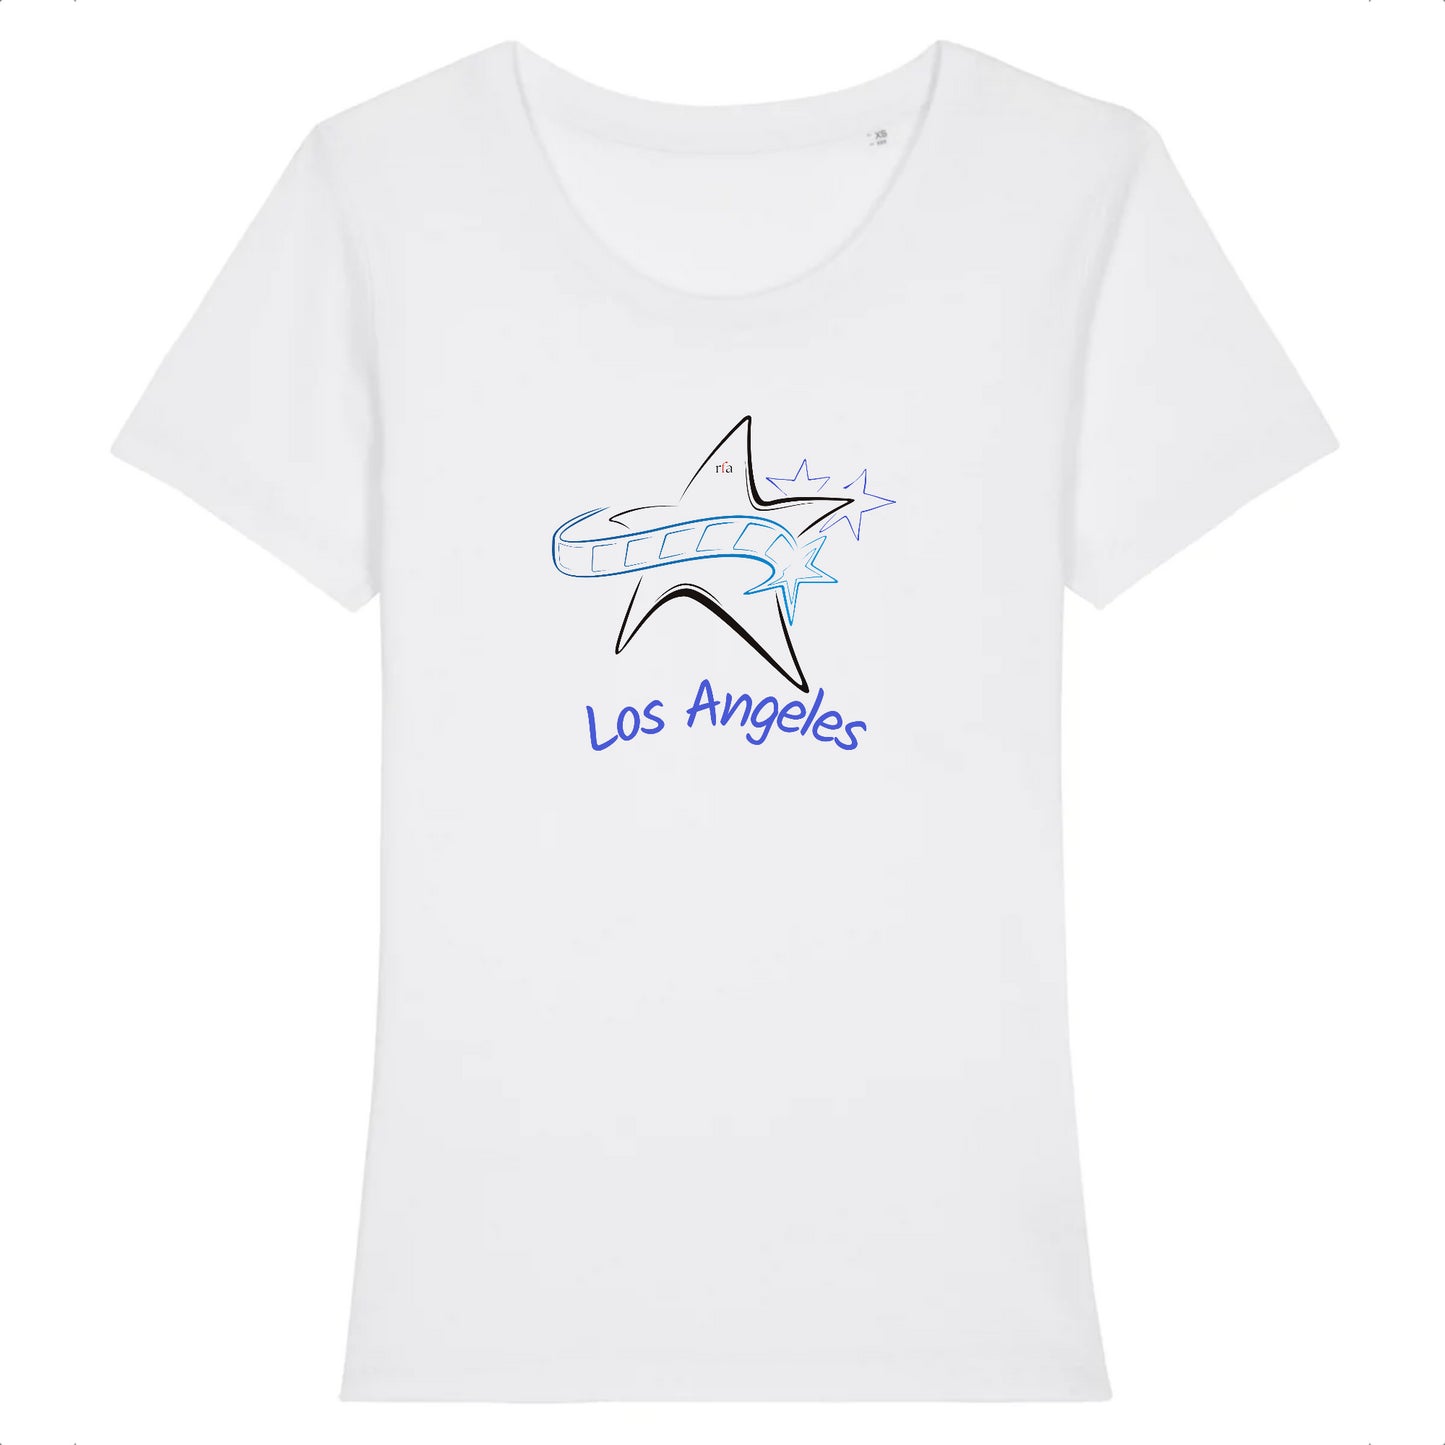 Women's Tee - LOS ANGELES